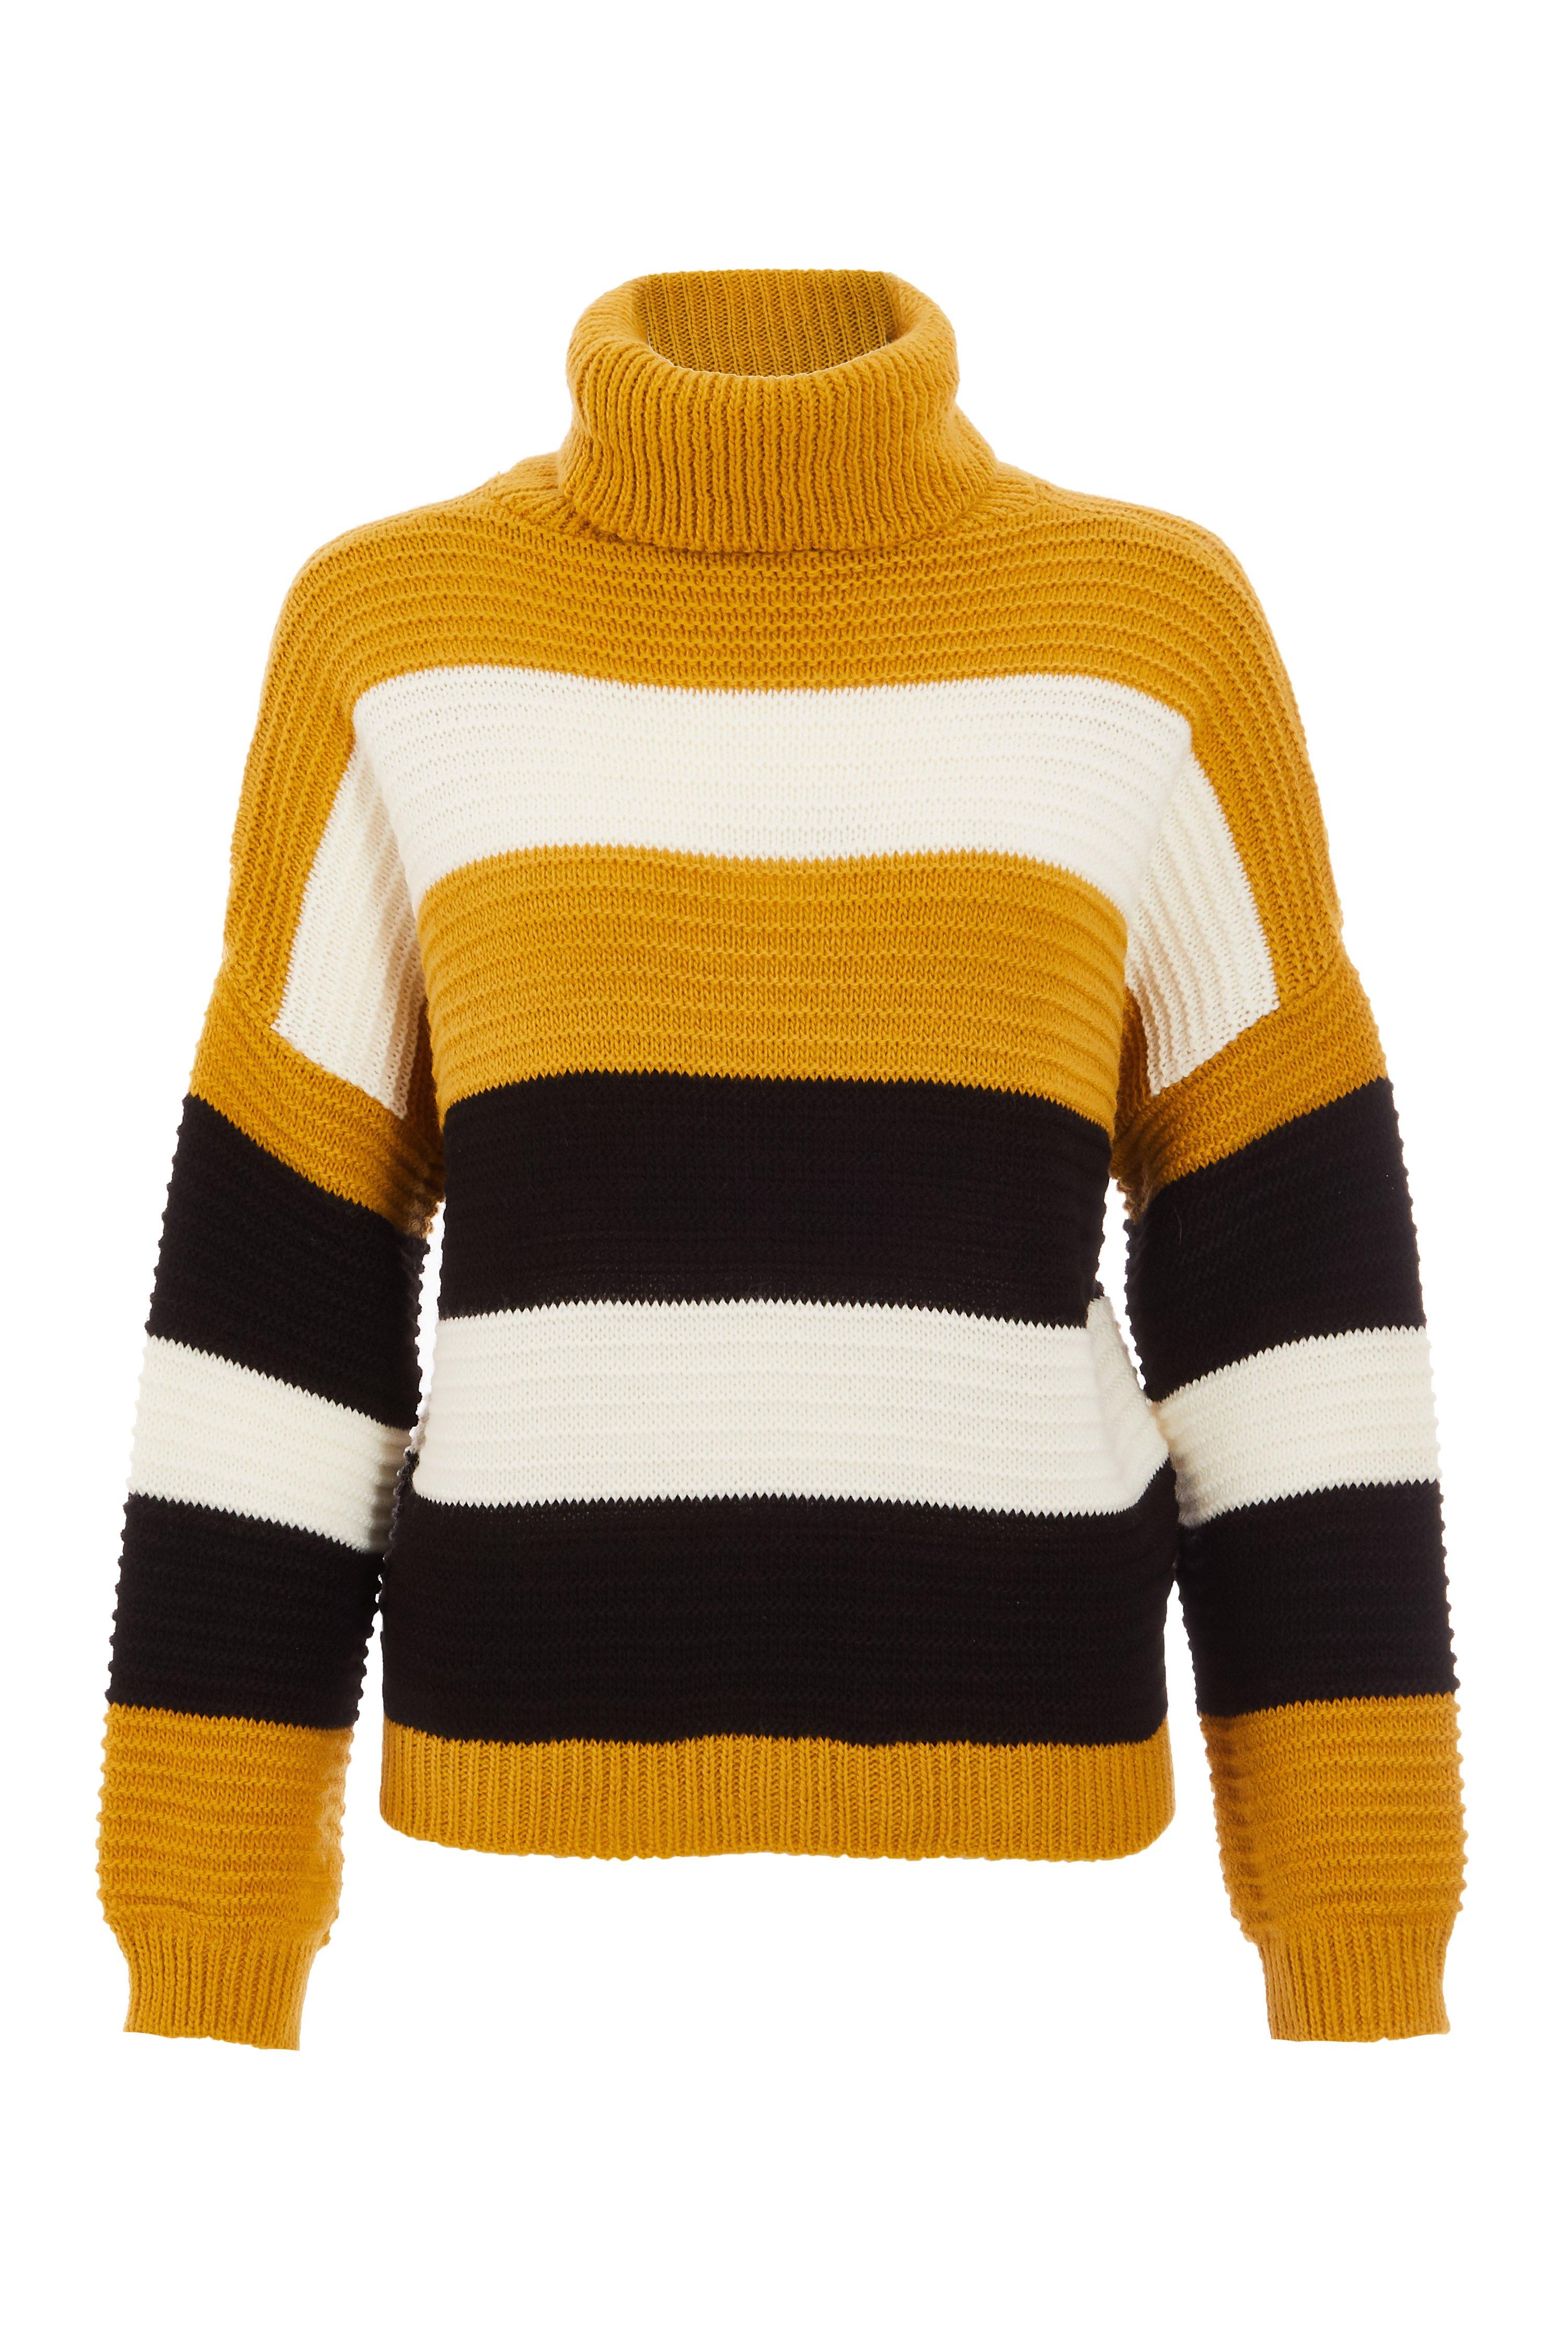 Mustard Cream and Black Stripe Knit Roll Neck Jumper - Quiz Clothing